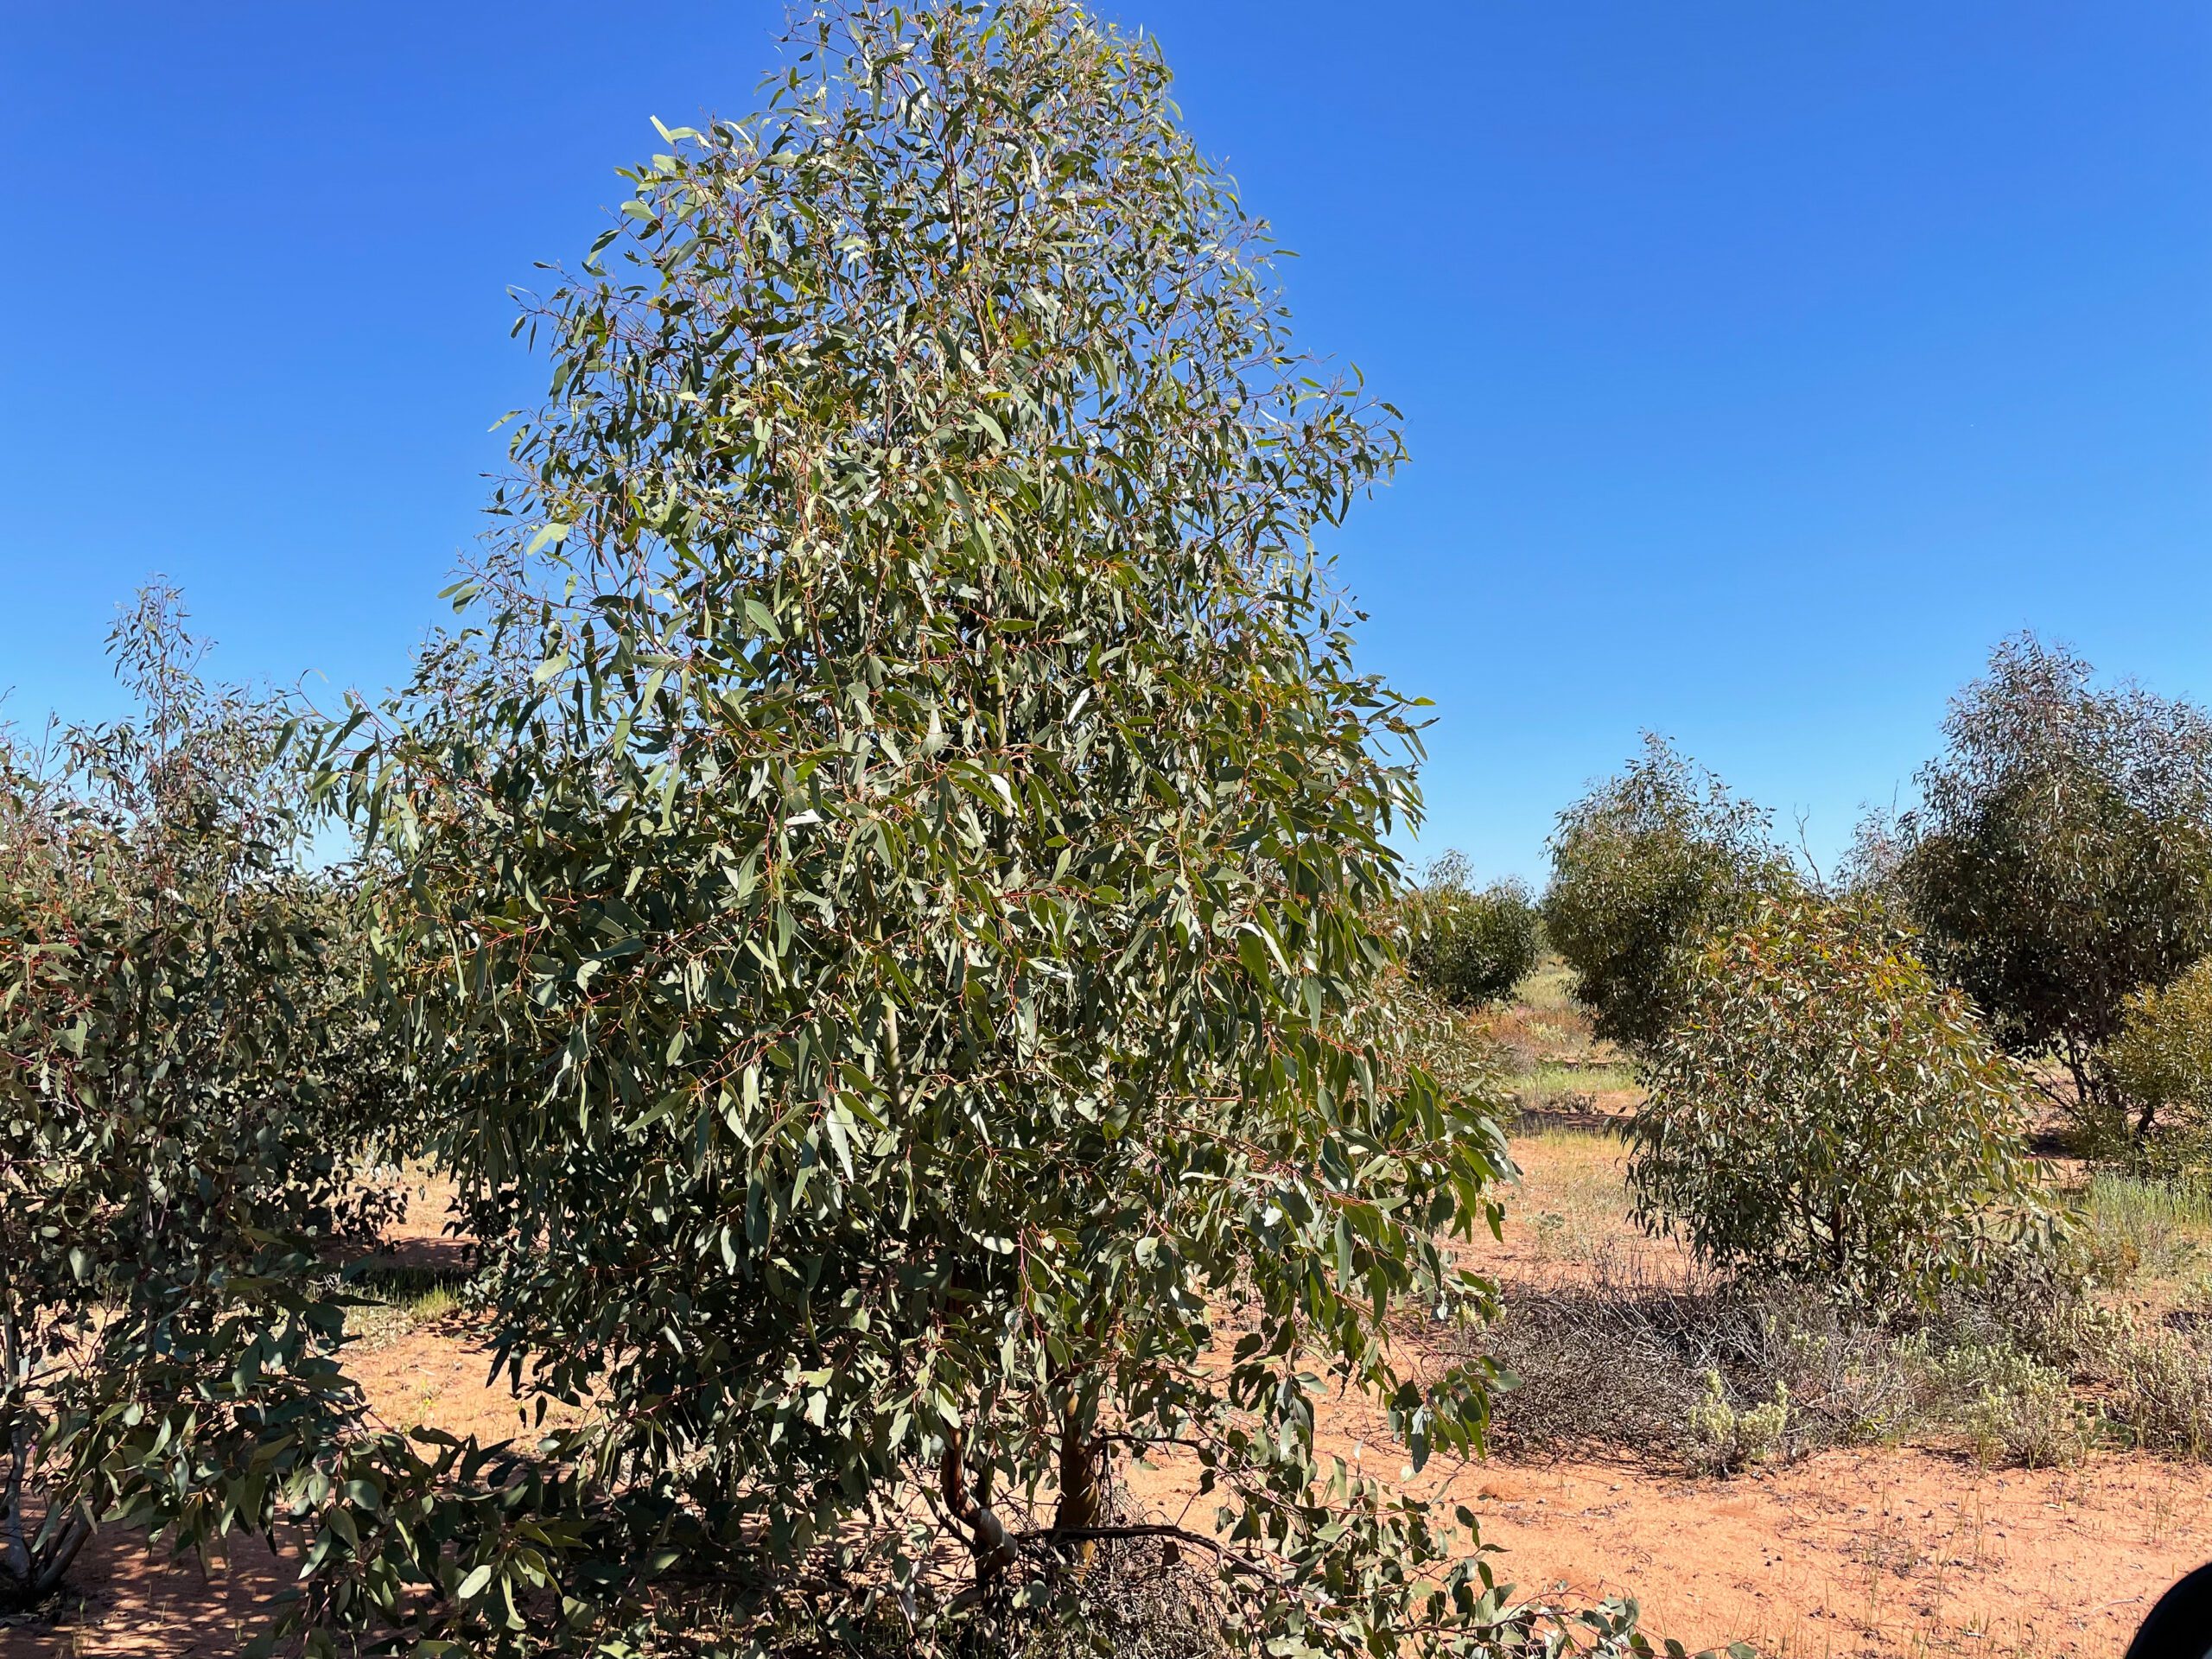 Rows of young eucalyptus trees in orange soil